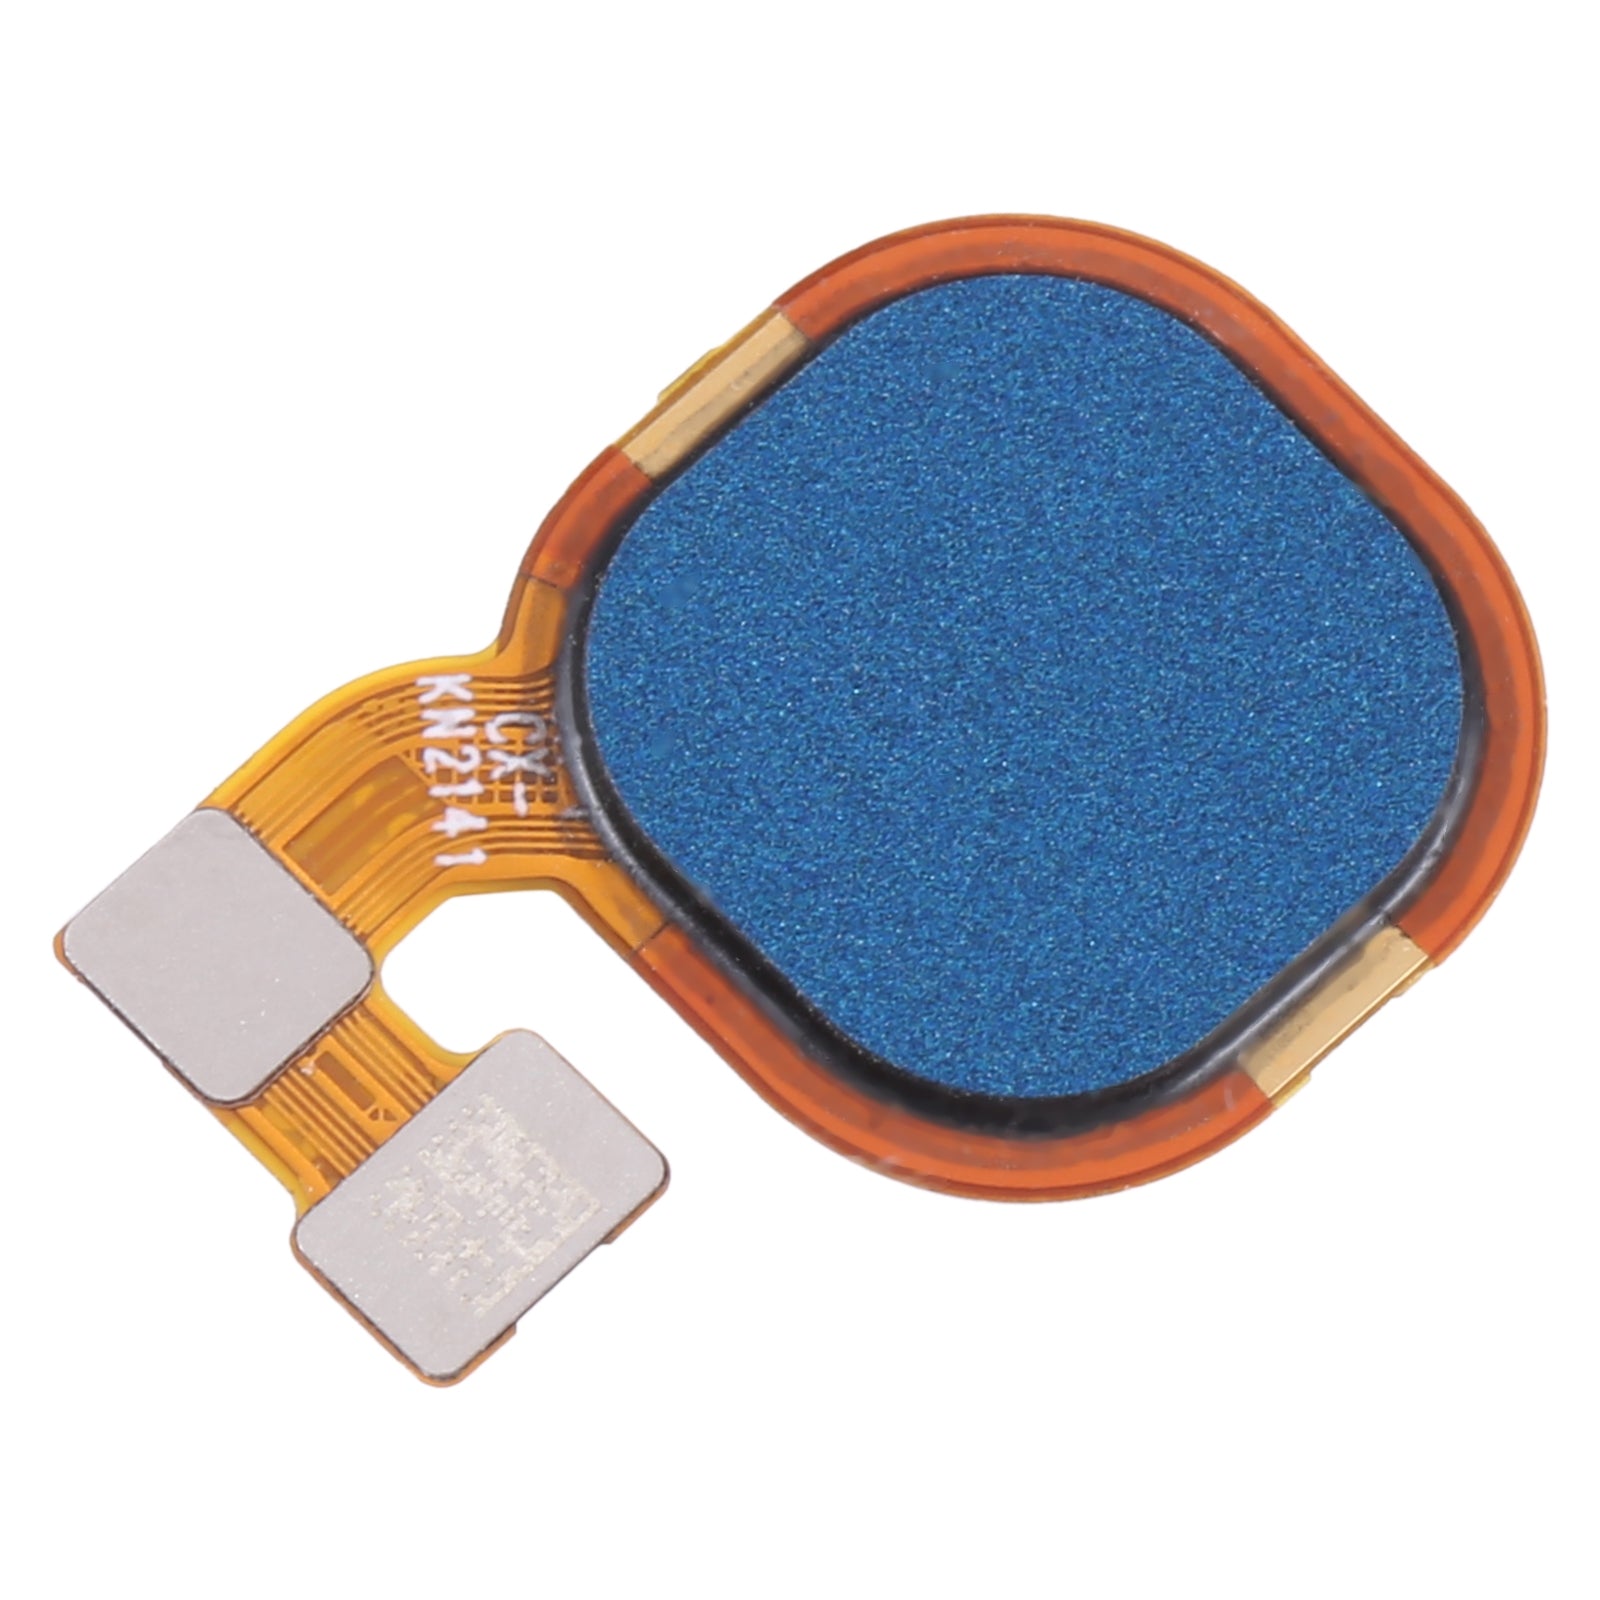 Capteur d'empreintes digitales à bouton flexible Infinix Hot 8 bleu